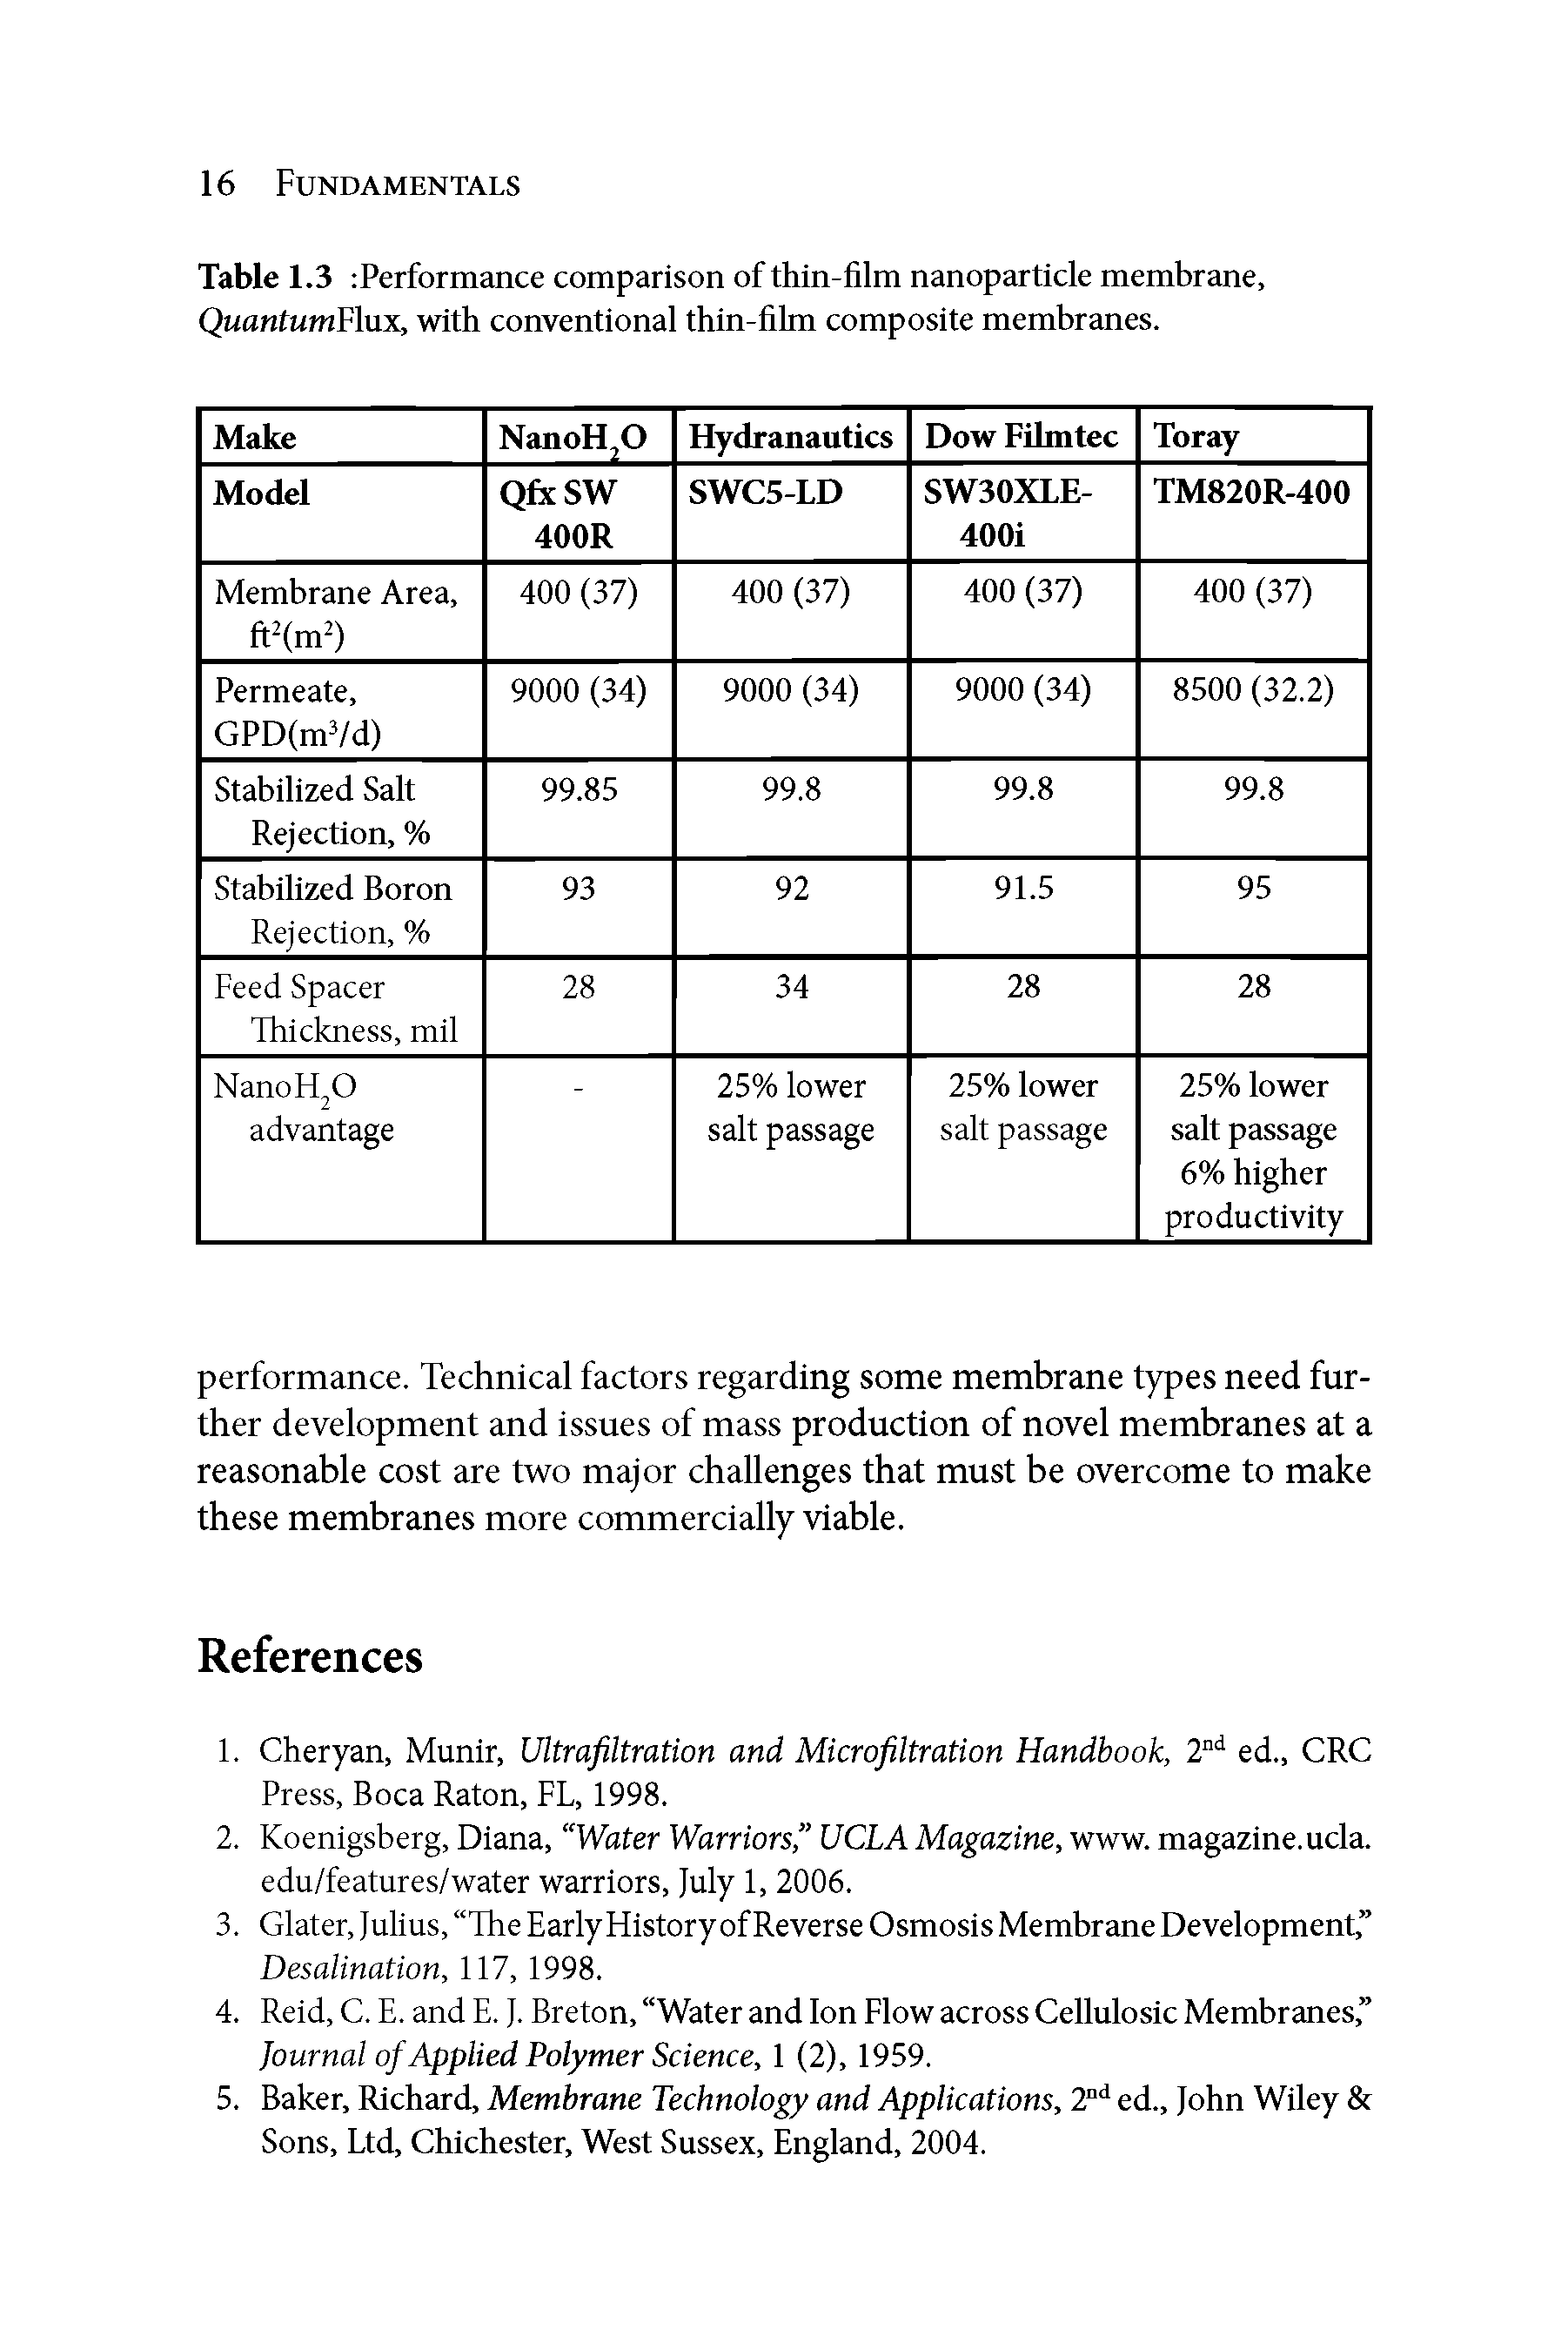 Table 1.3 Performance comparison of thin-film nanoparticle membrane, QuantumFlwL, with conventional thin-fihn composite membranes.